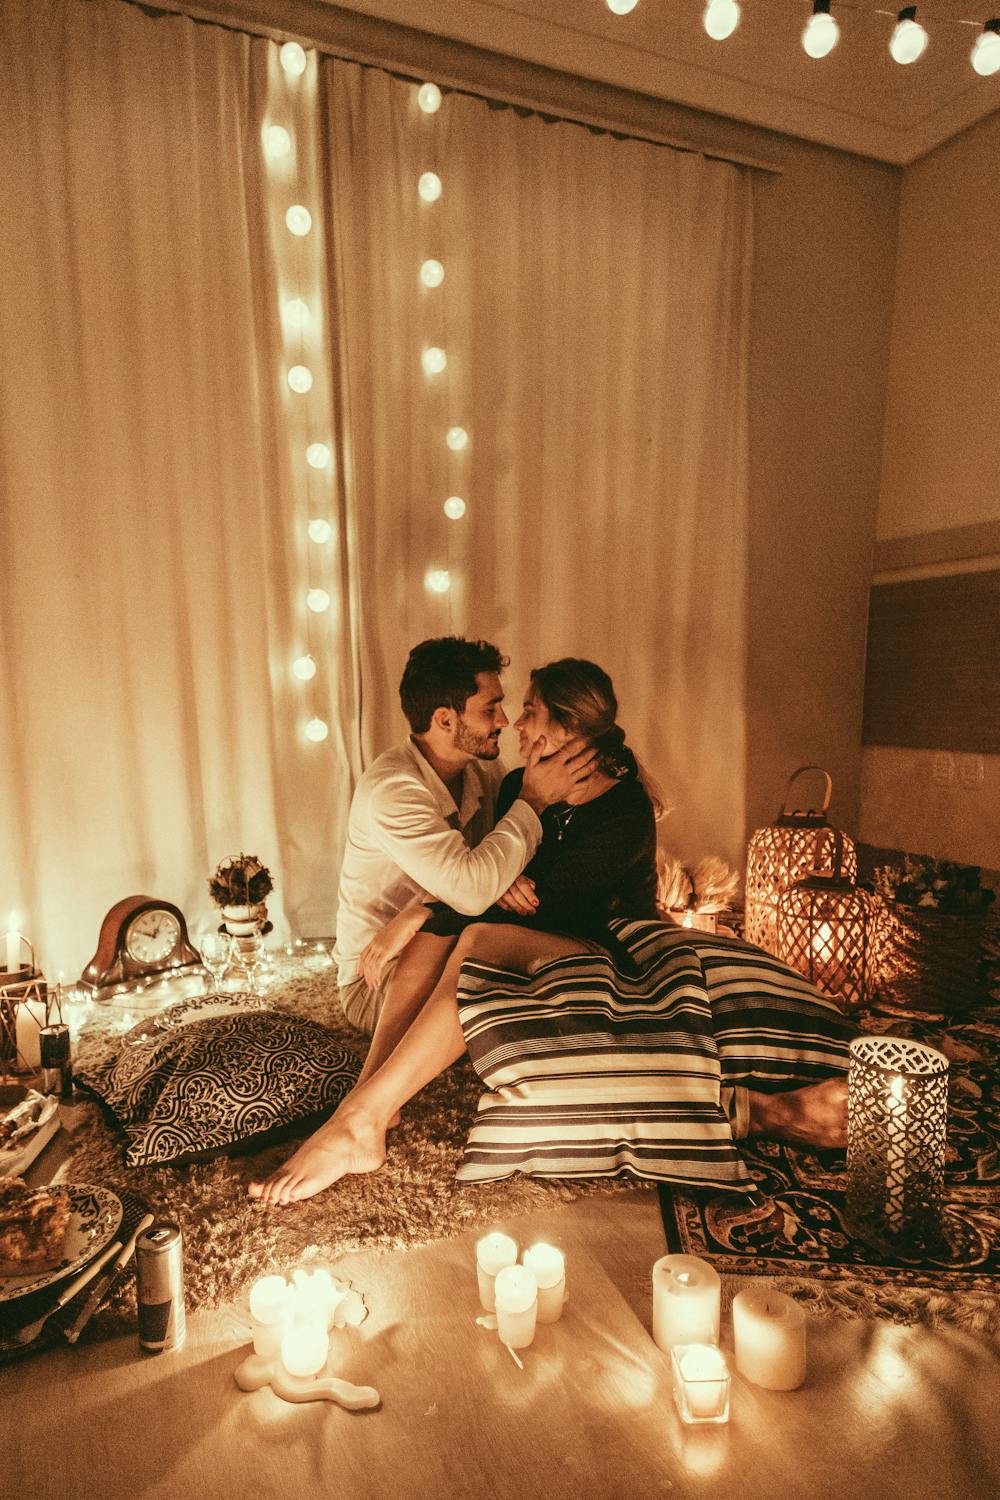 Romantic couple in bed. | Photo: Pexels